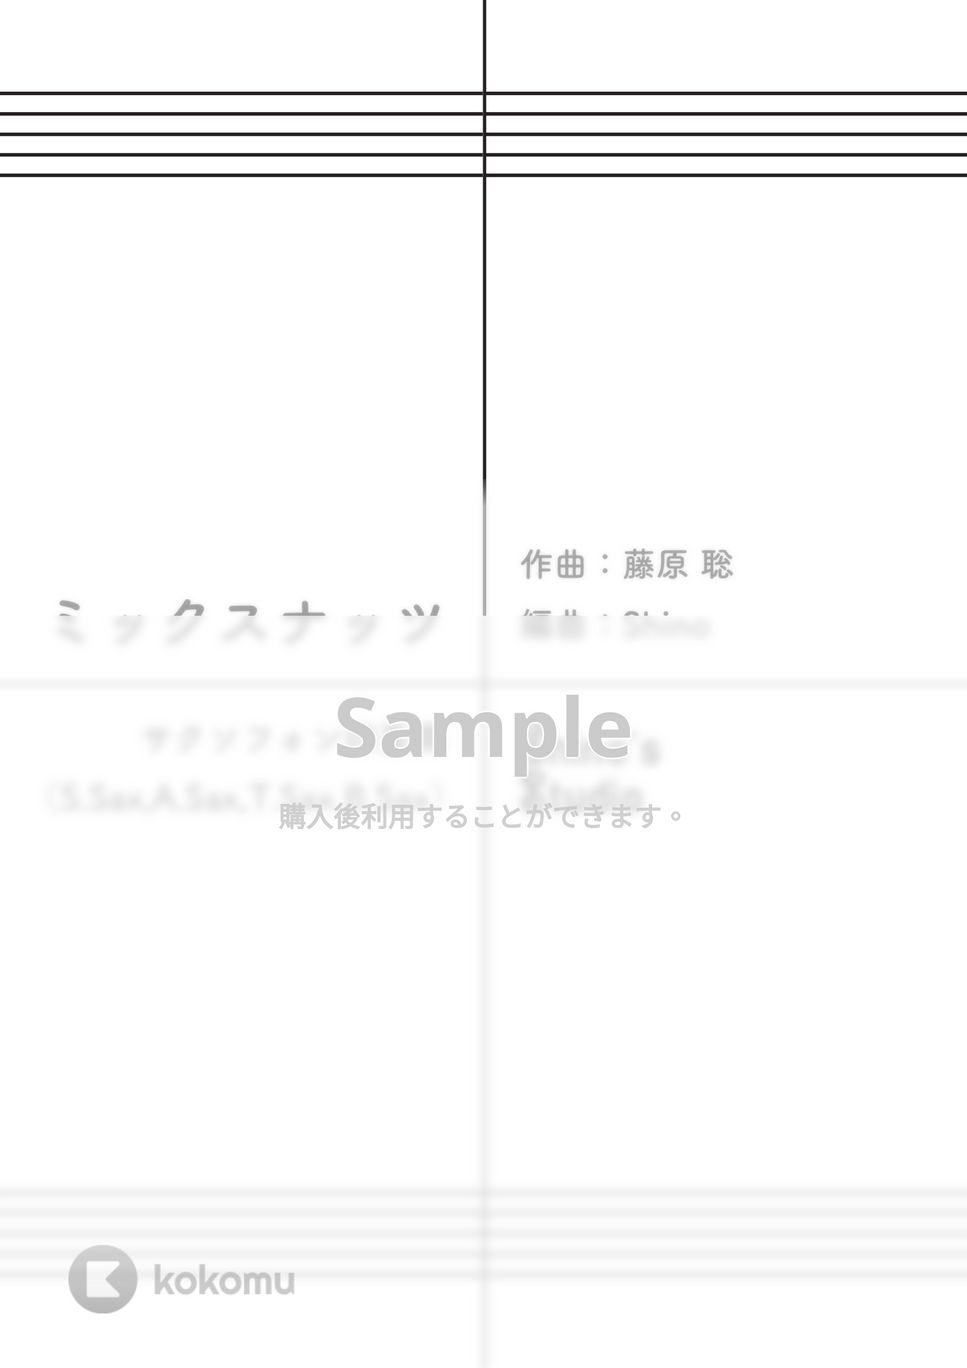 Official髭男dism - 【サックス四重奏】ミックスナッツ【通常盤】 by Shino